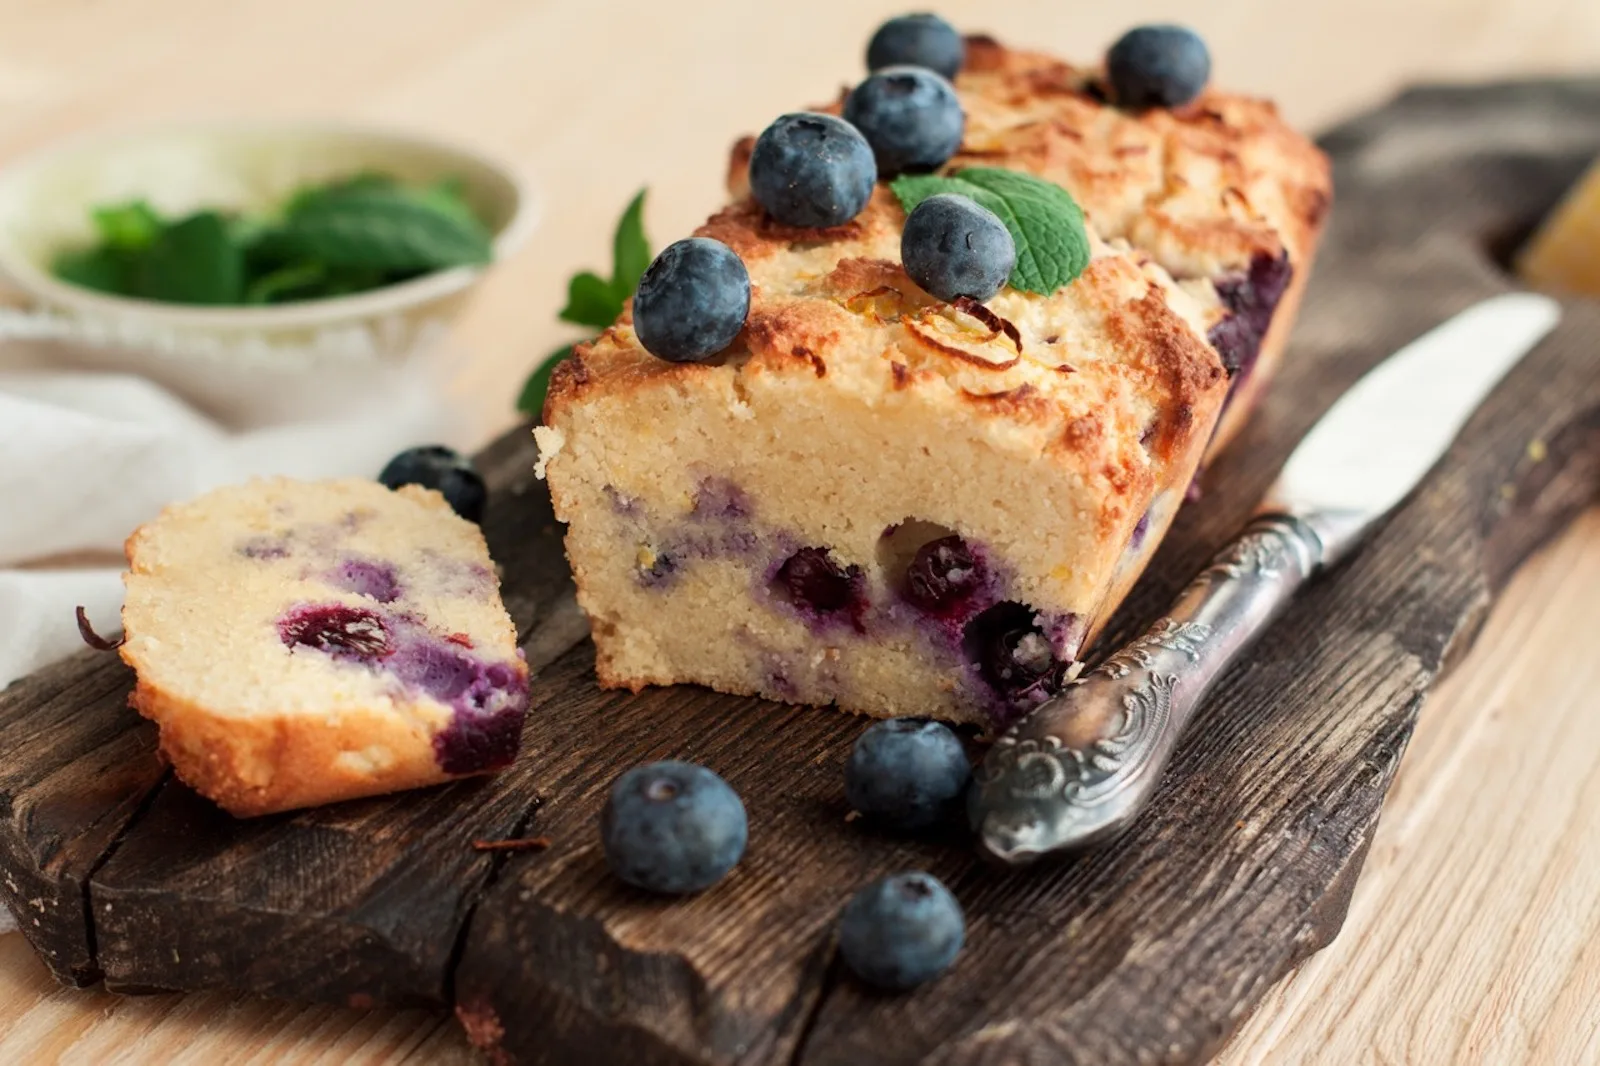 Healthy vegan sweet lemon bread with blueberries on rustic cutting board